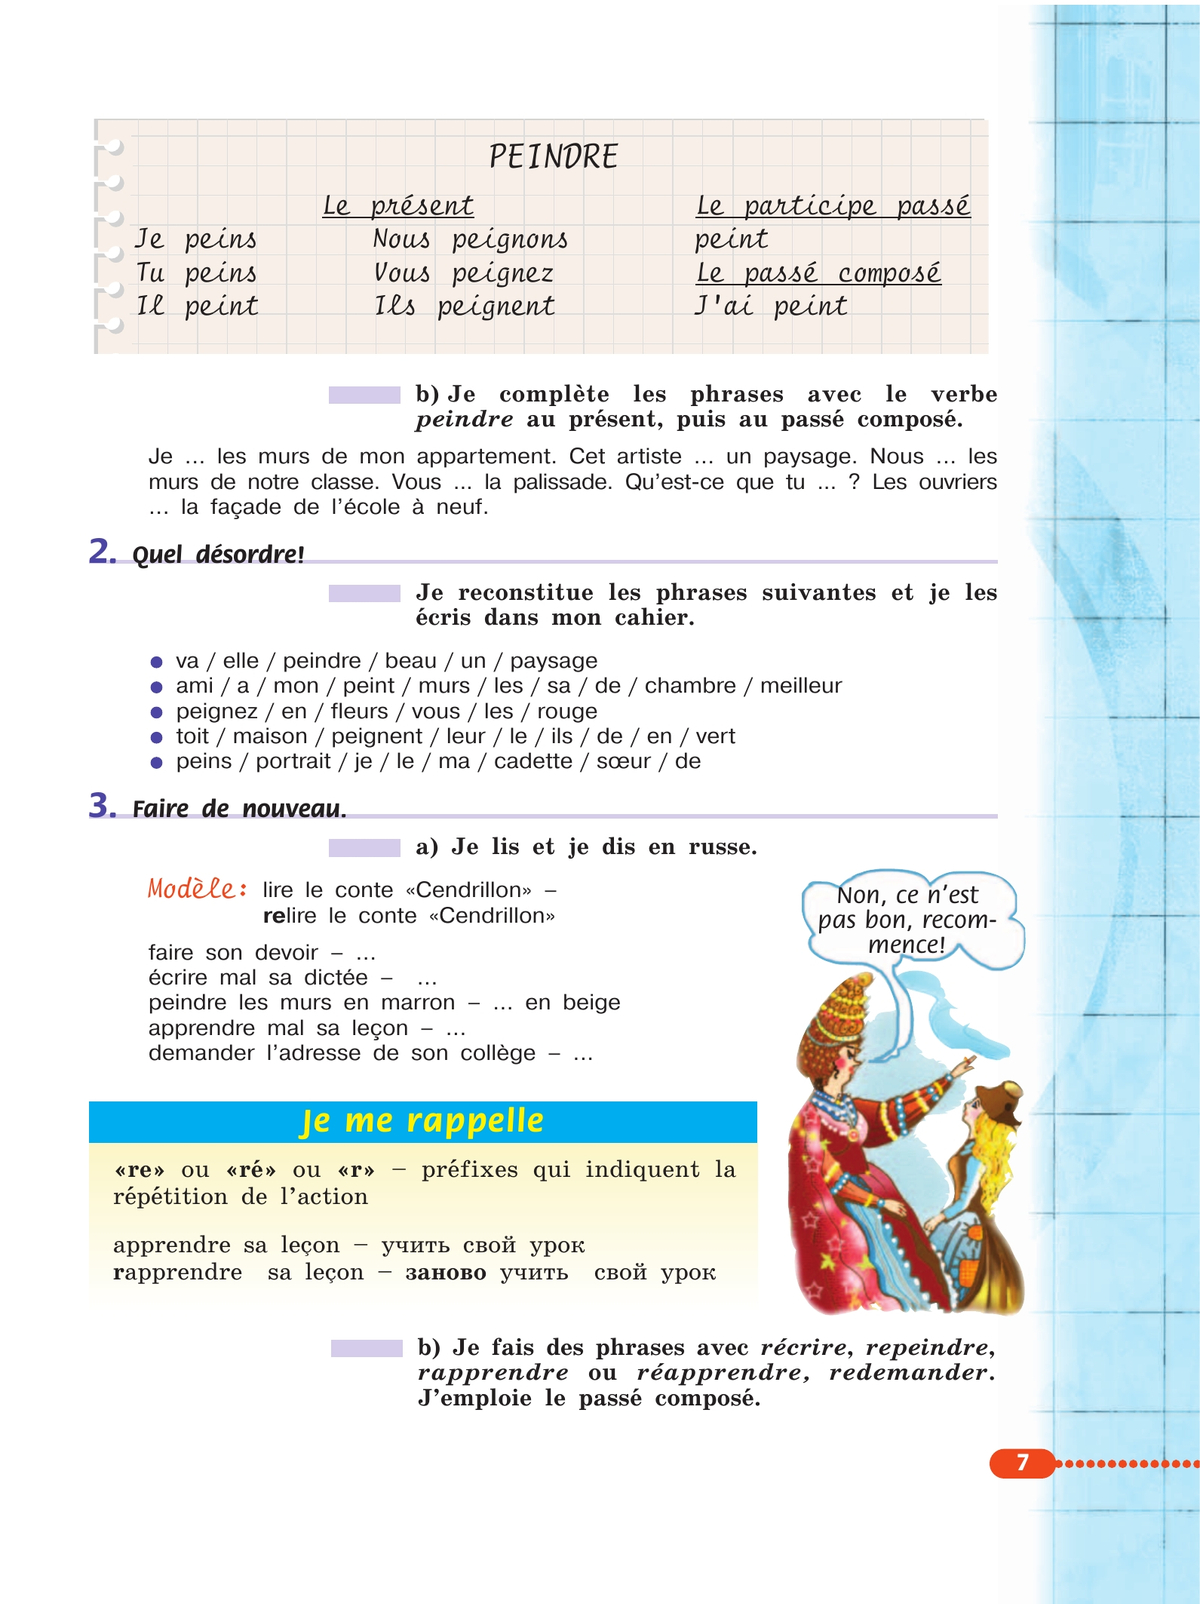 Французский язык. 6 класс. Учебник 7